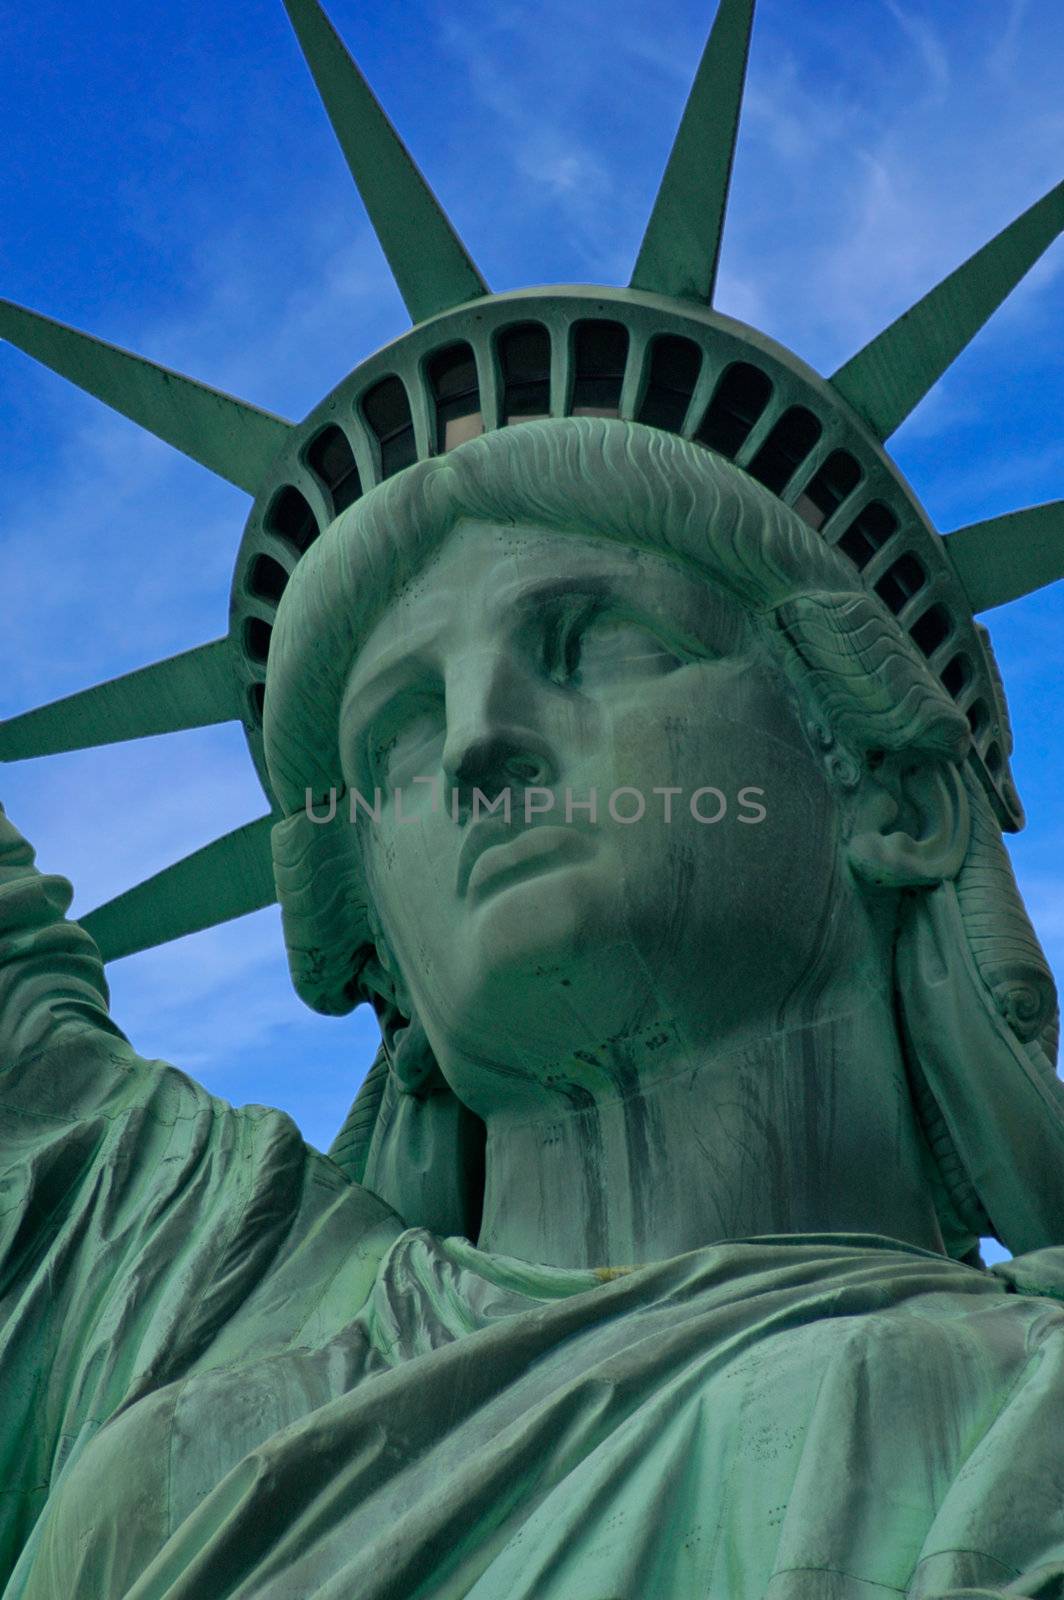 Closeup of the Statue of Liberty on Liberty Island